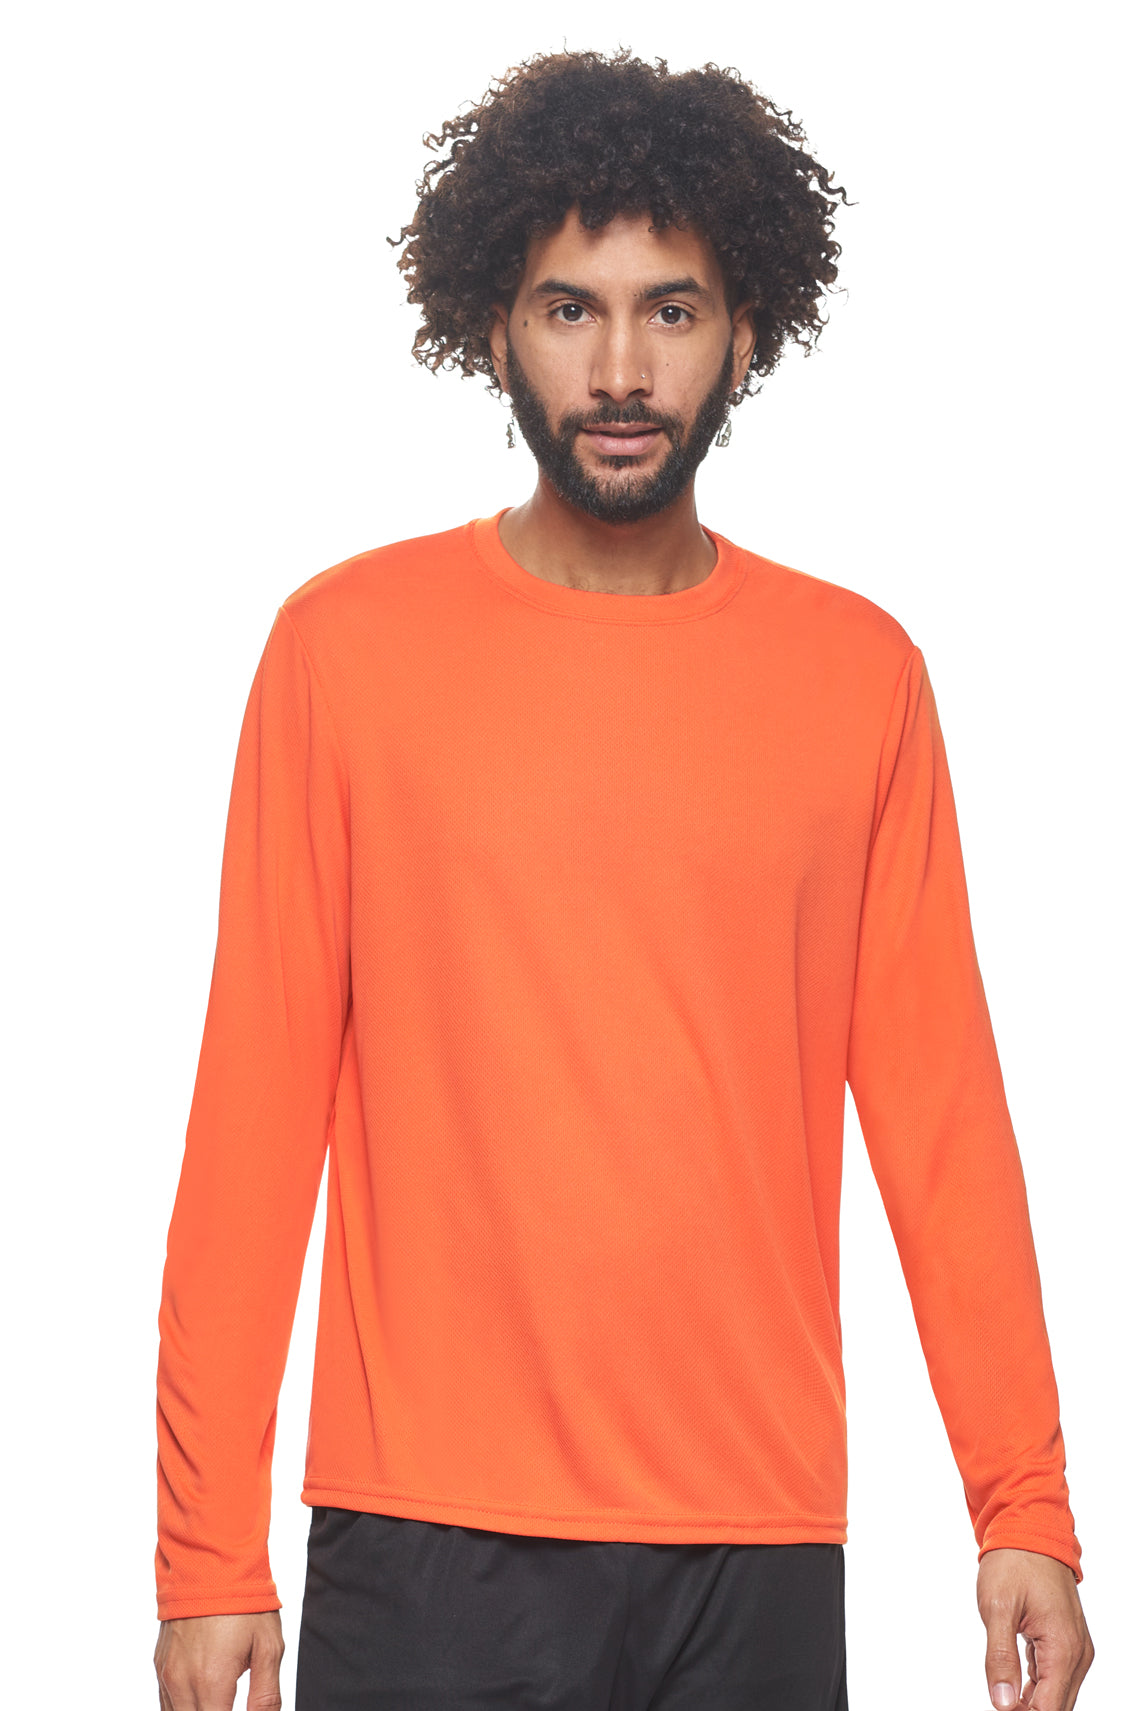 Expert Brand Wholesale Sportswear Activewear Made in USA Oxymesh™ Long Sleeve Tec Tee AJ901D orange#orange